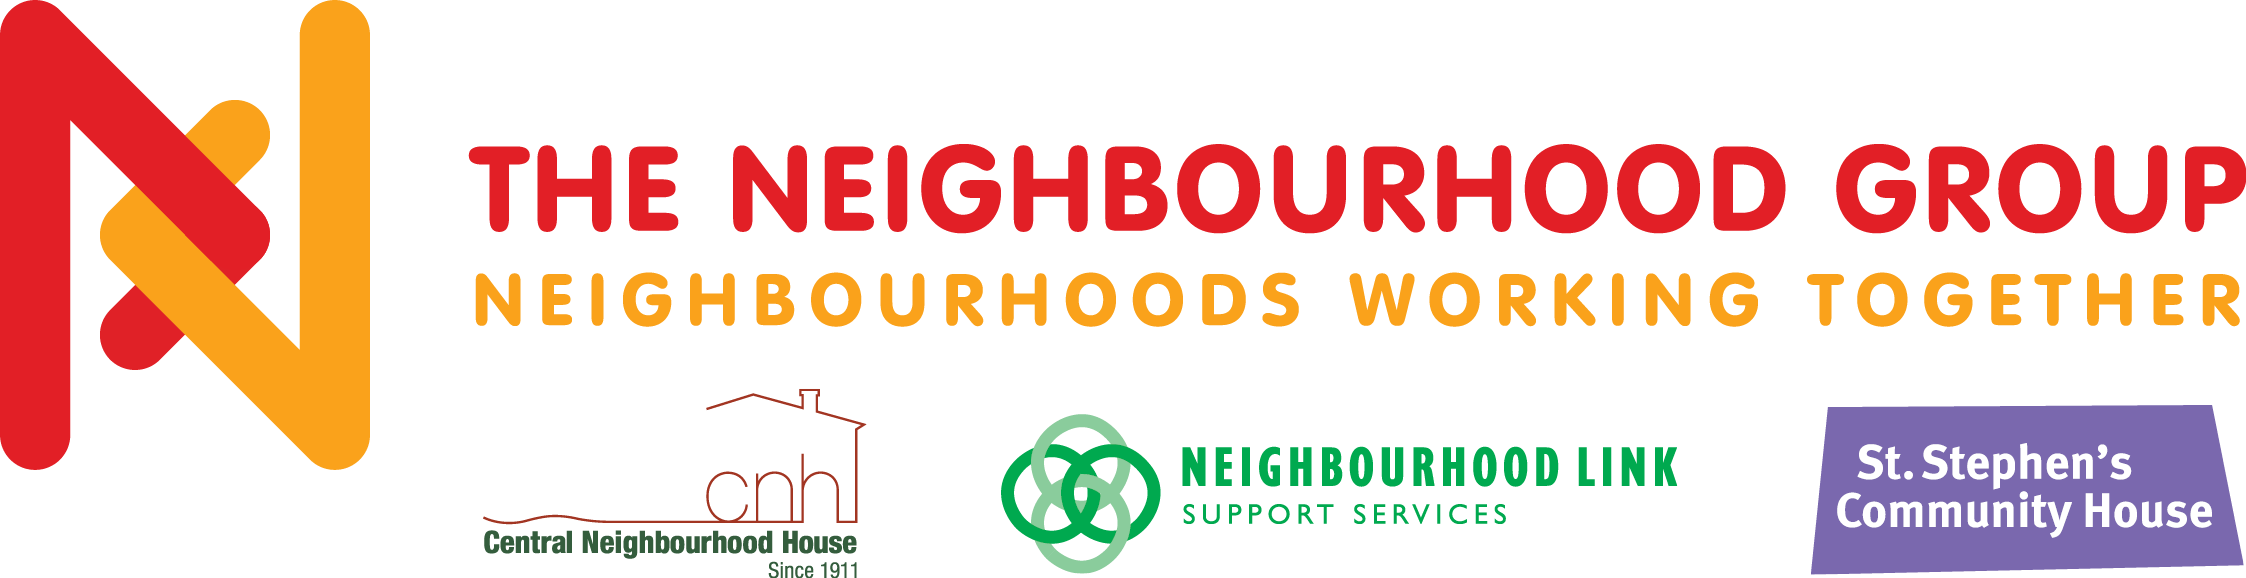 The Neighbourhood Group logo